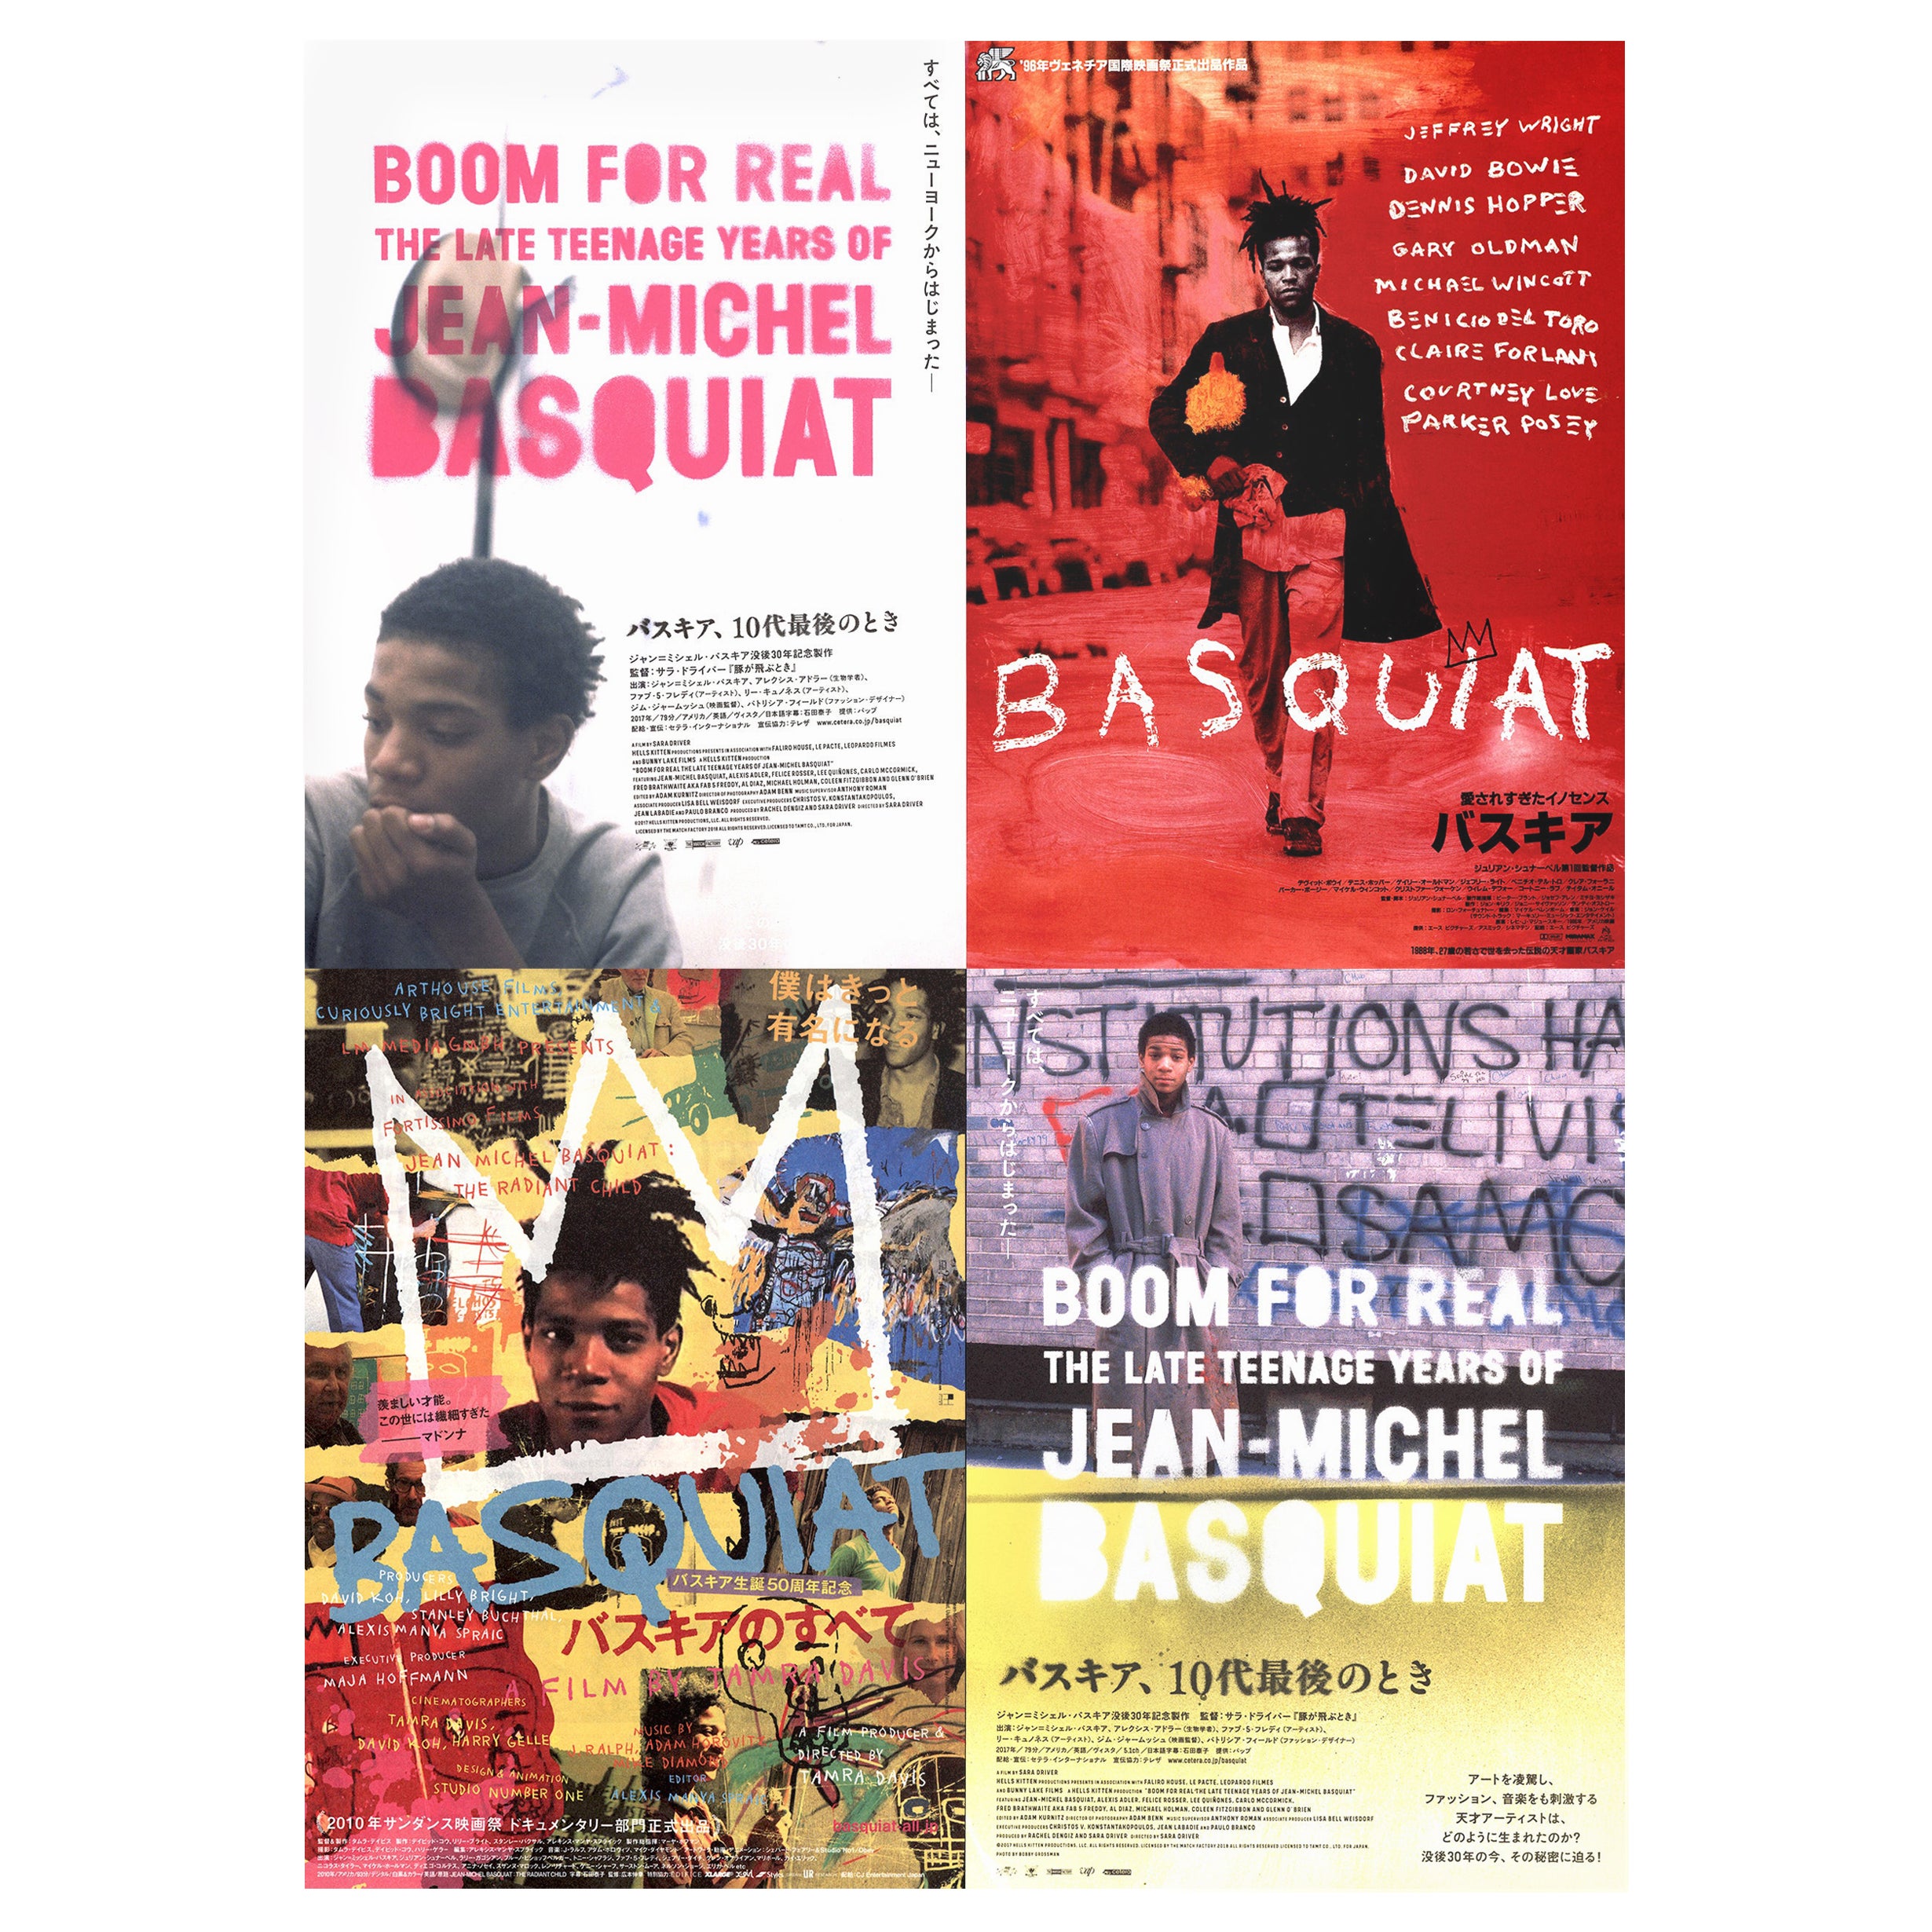 Basquiat Movie Posters Japan: Set of 4 Works